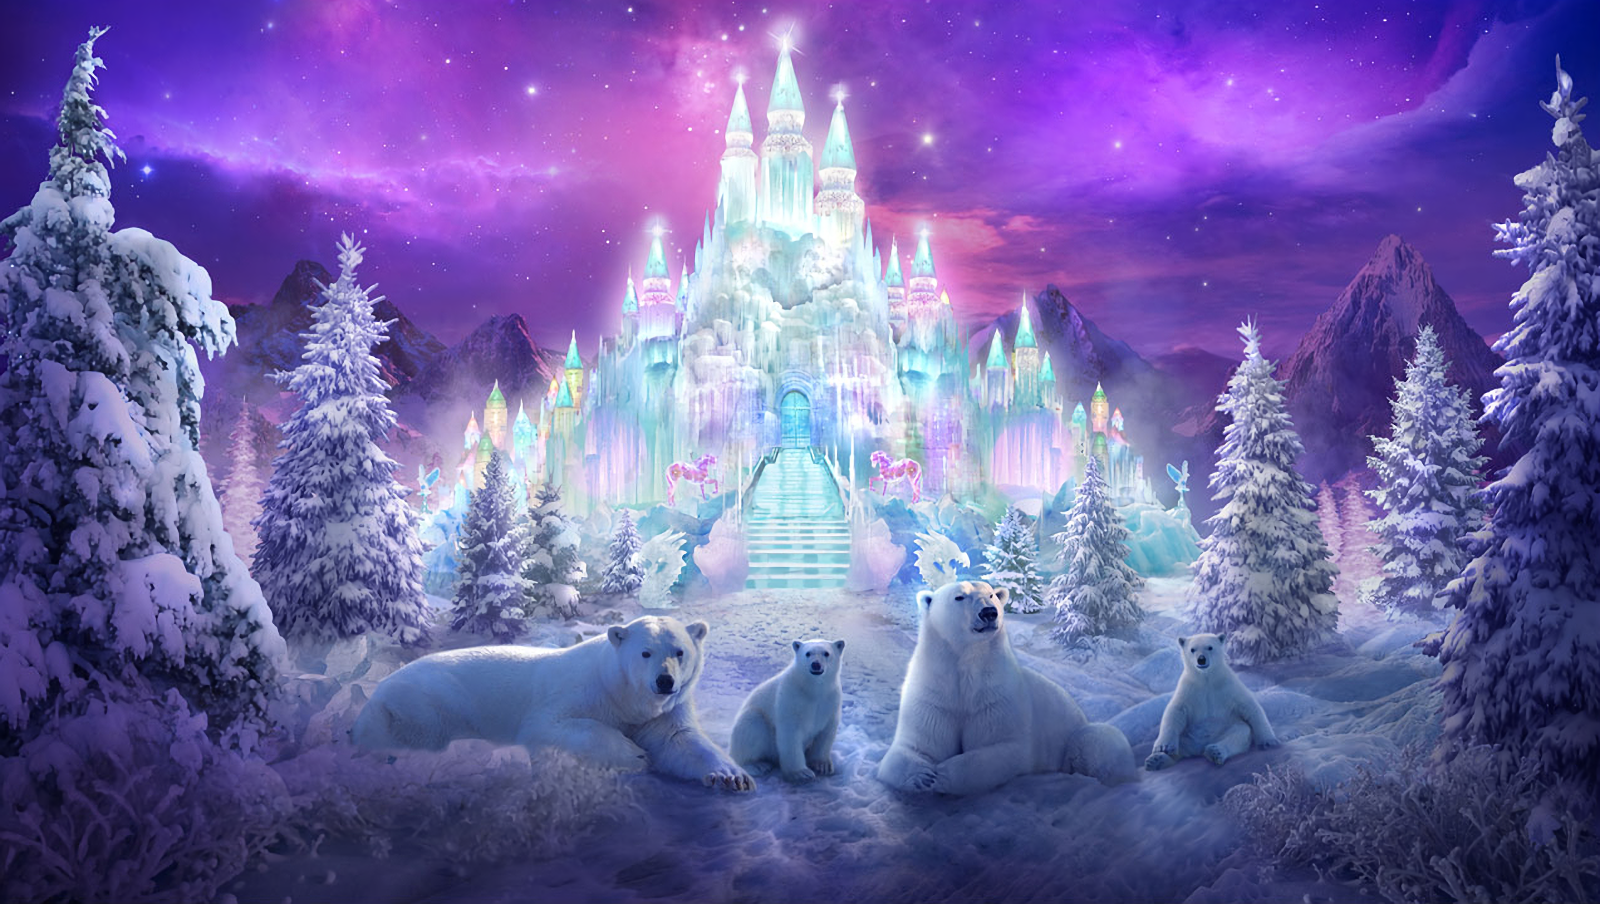 Magical Winter Wonderland by Philip Straub